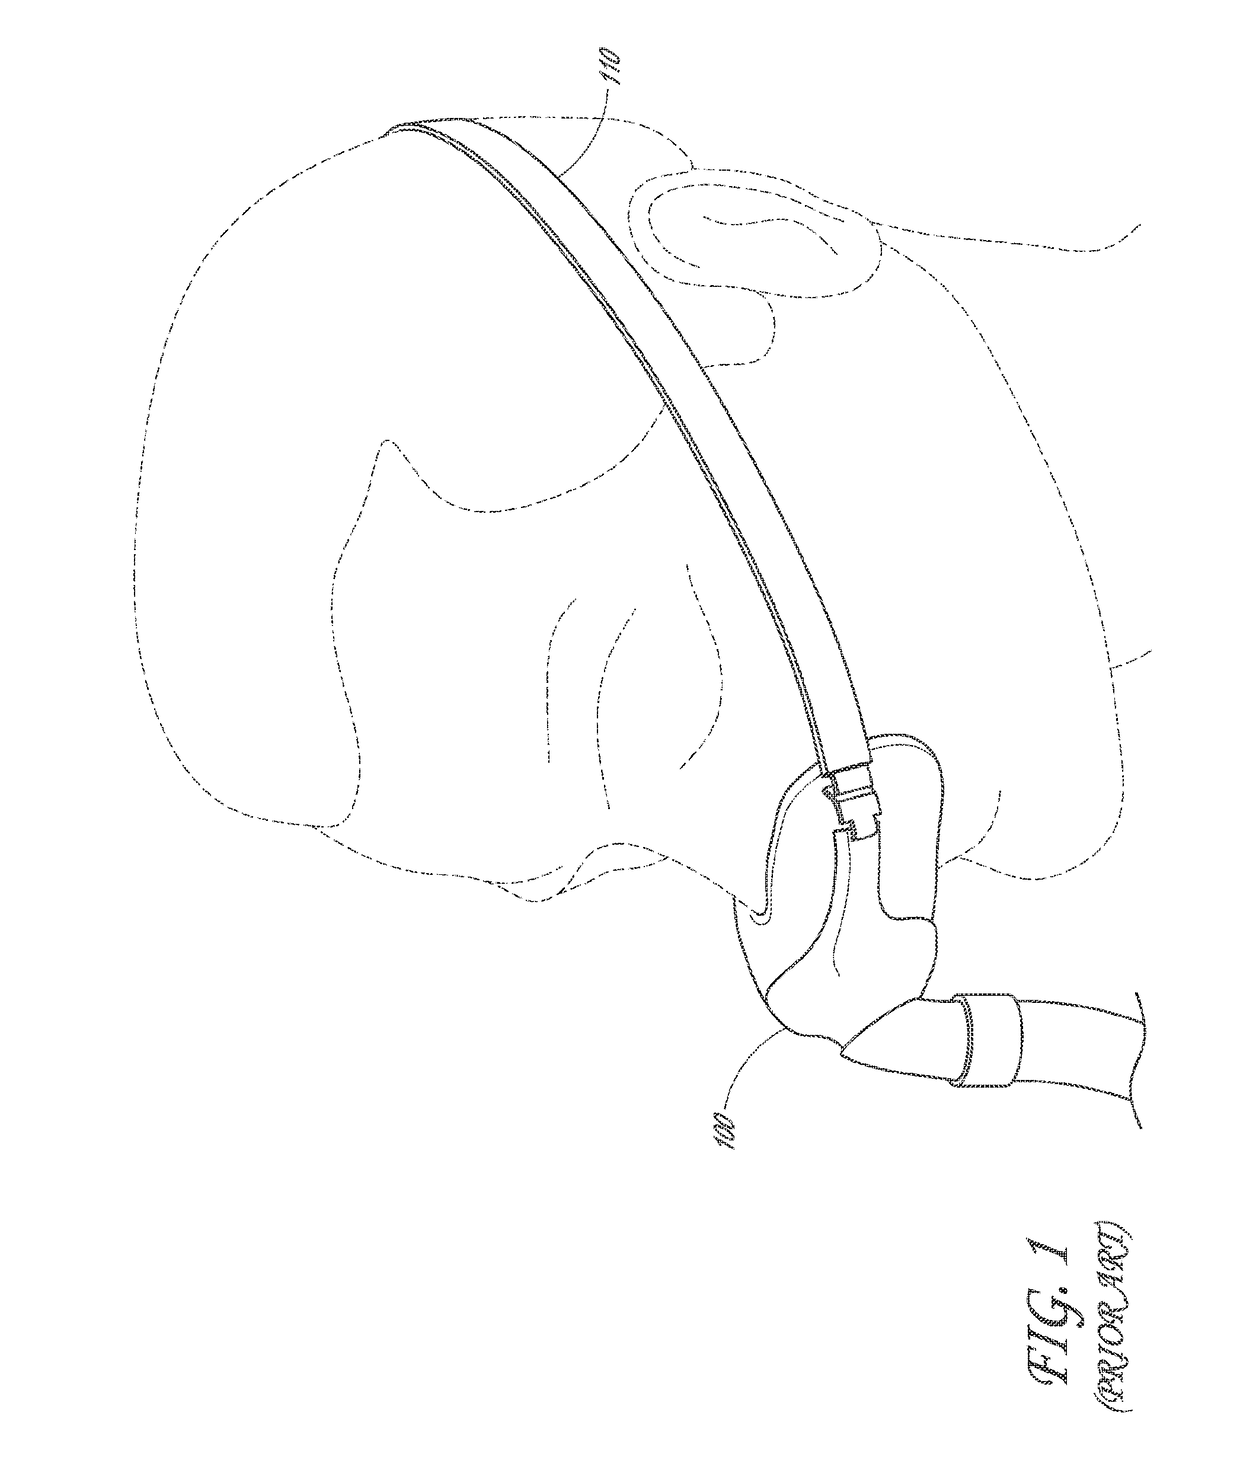 Headgear for a respiratory mask